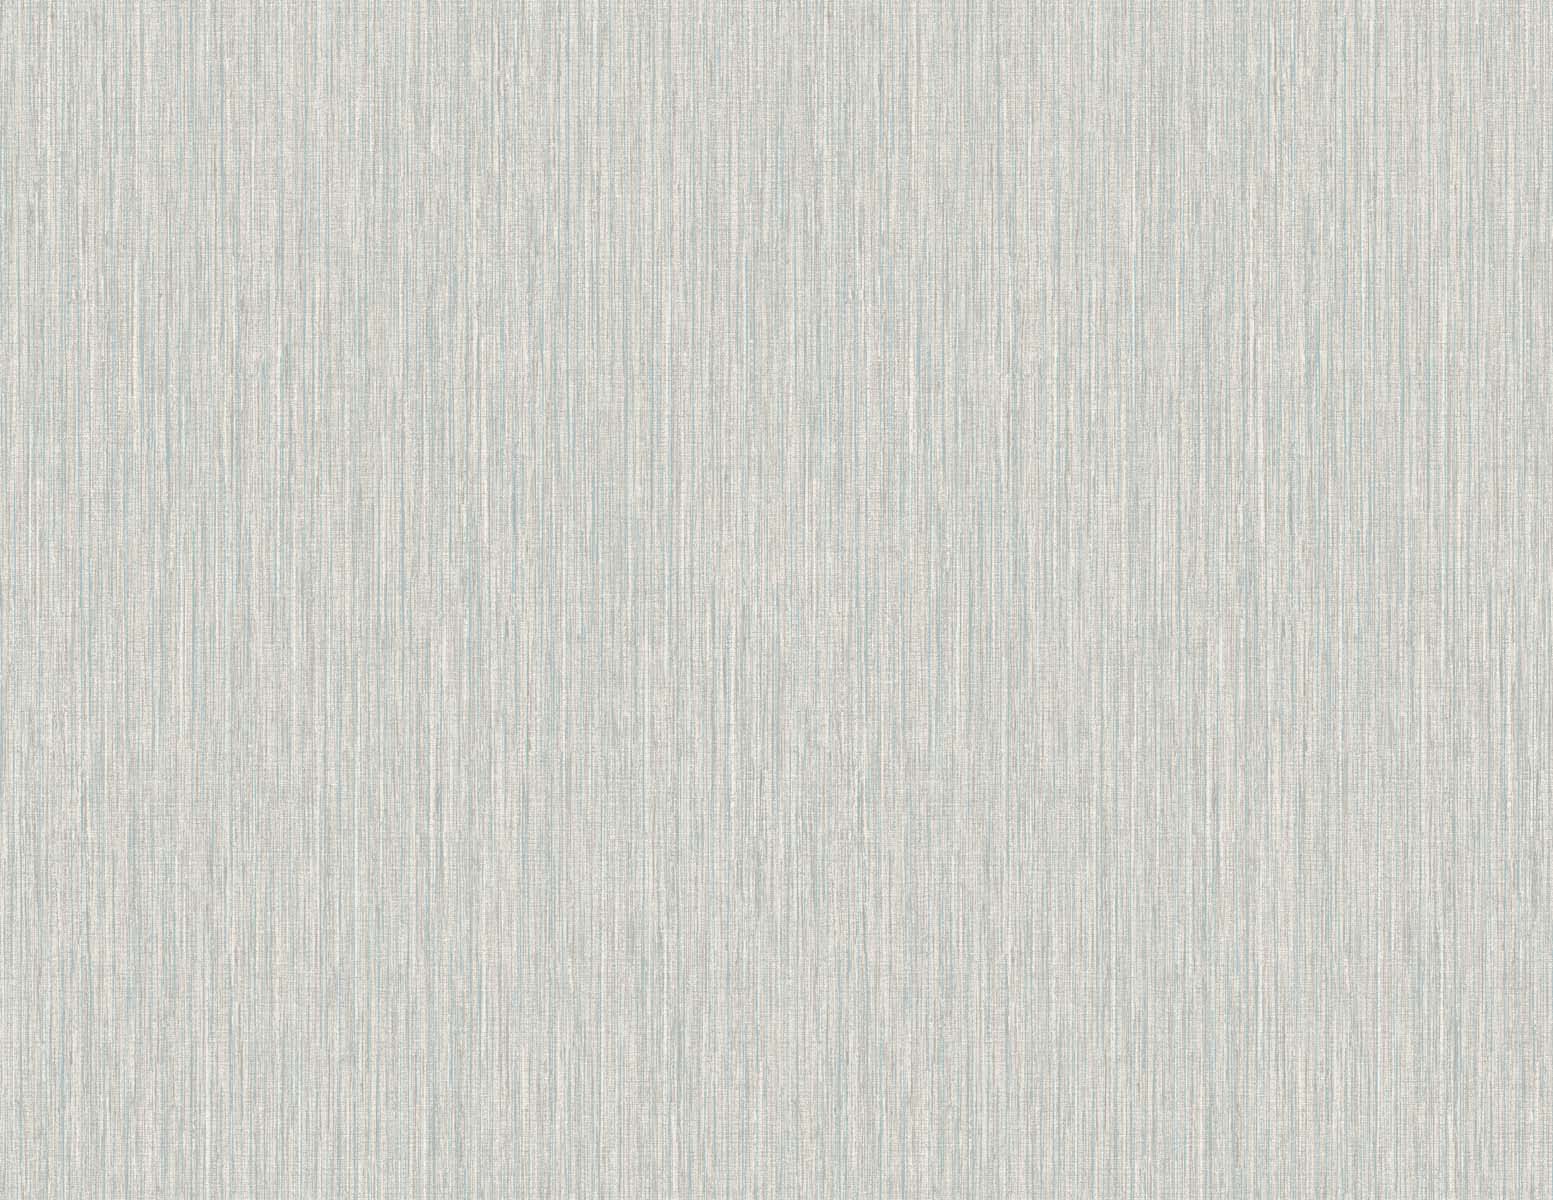 Seabrook Designs TS80938 Even More Textures Vertical Stria  Wallpaper Harbor Grey & Sky Blue